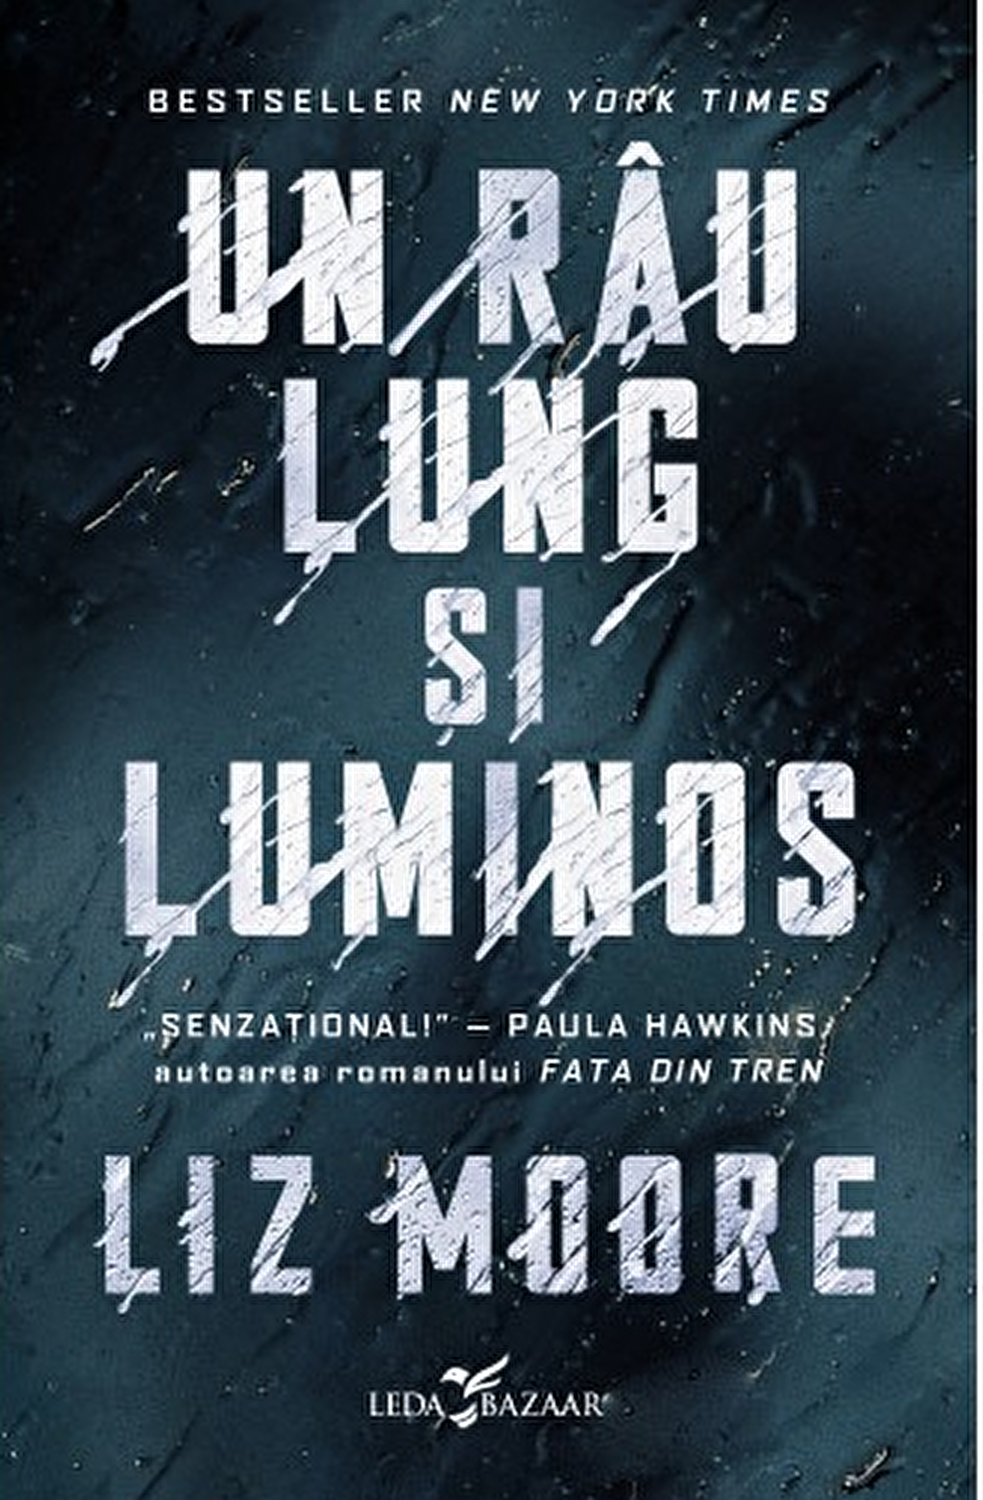 Un rau lung si luminos | Liz Moore carturesti.ro poza bestsellers.ro